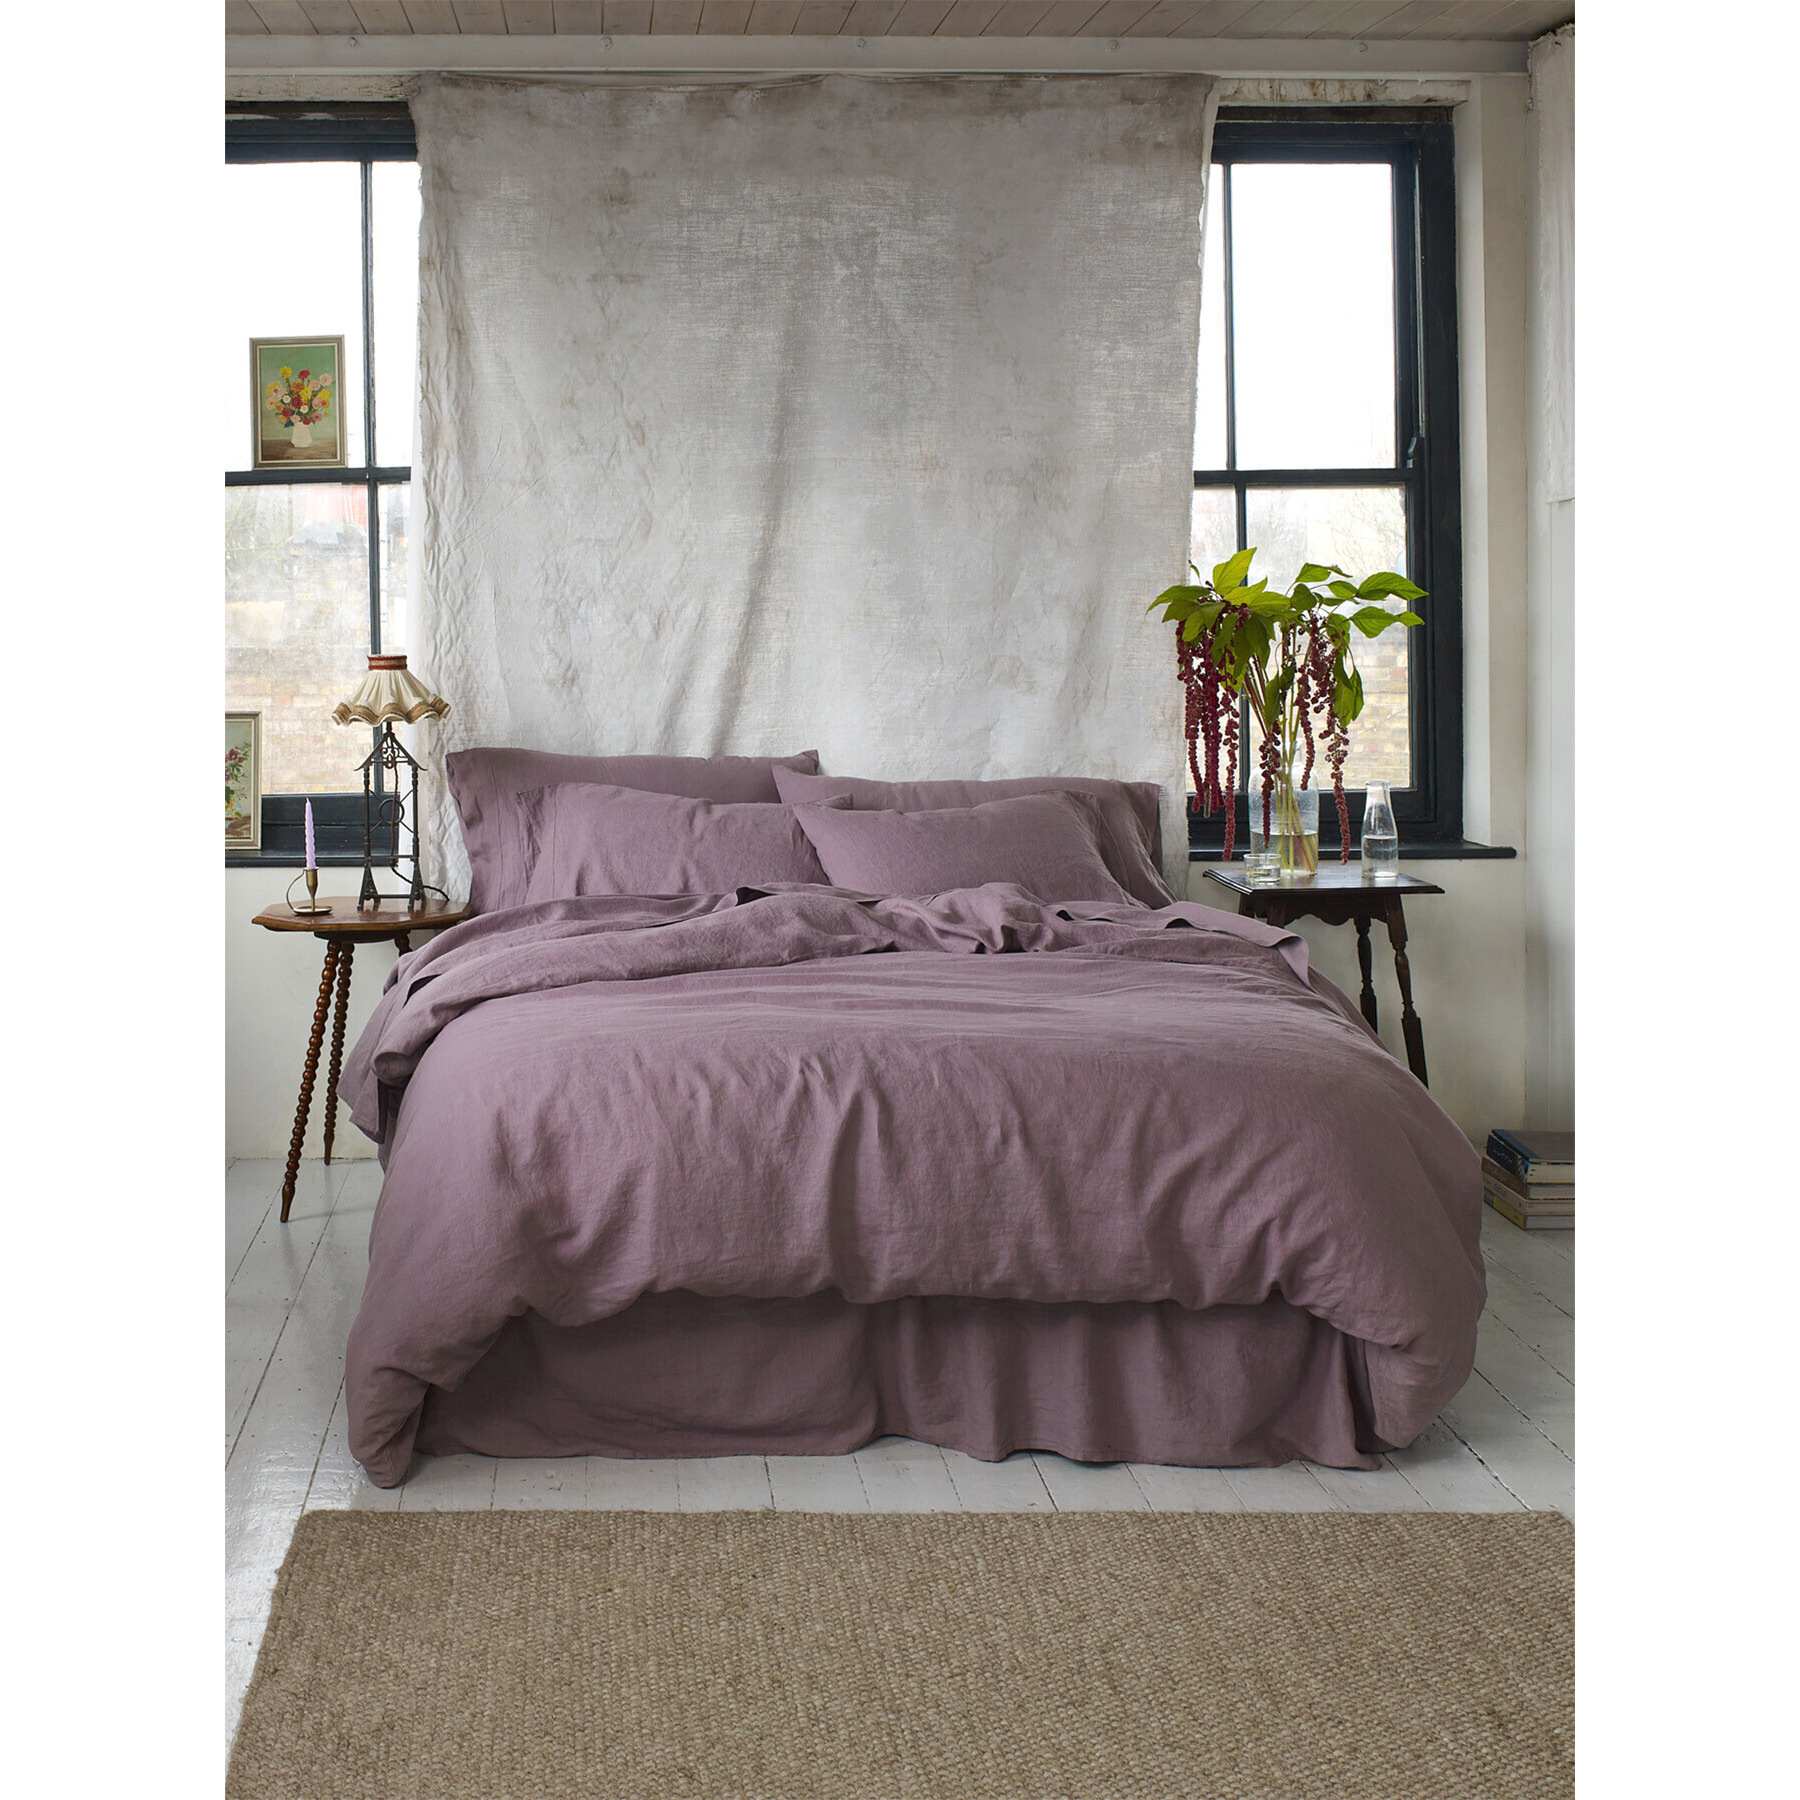 Piglet in Bed Linen Duvet Cover - Size Super King Purple - image 1